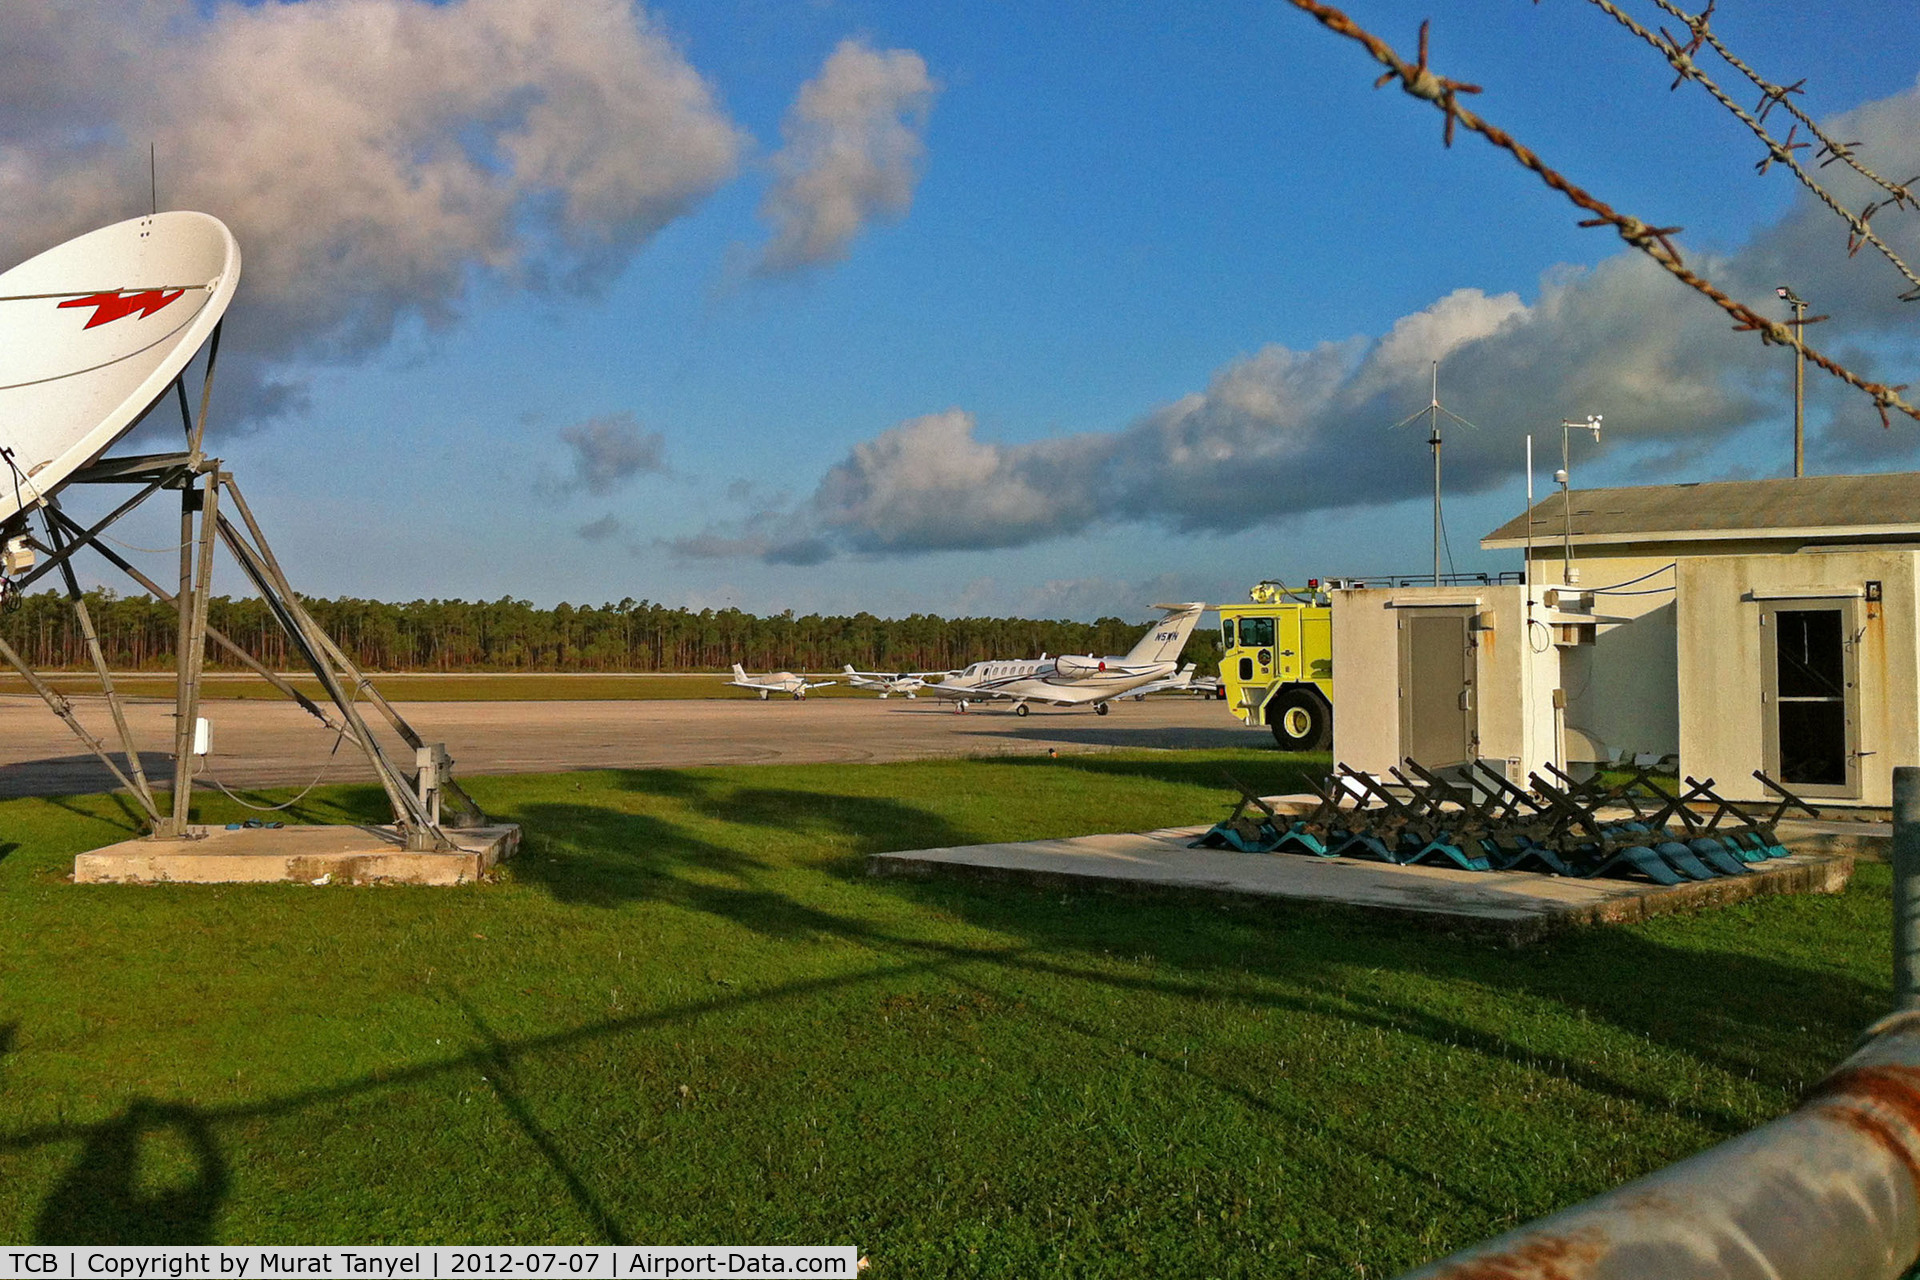 Treasure Cay Airport, Treasure Cay, Abaco Bahamas (TCB) - A peek at the airfield through the fence